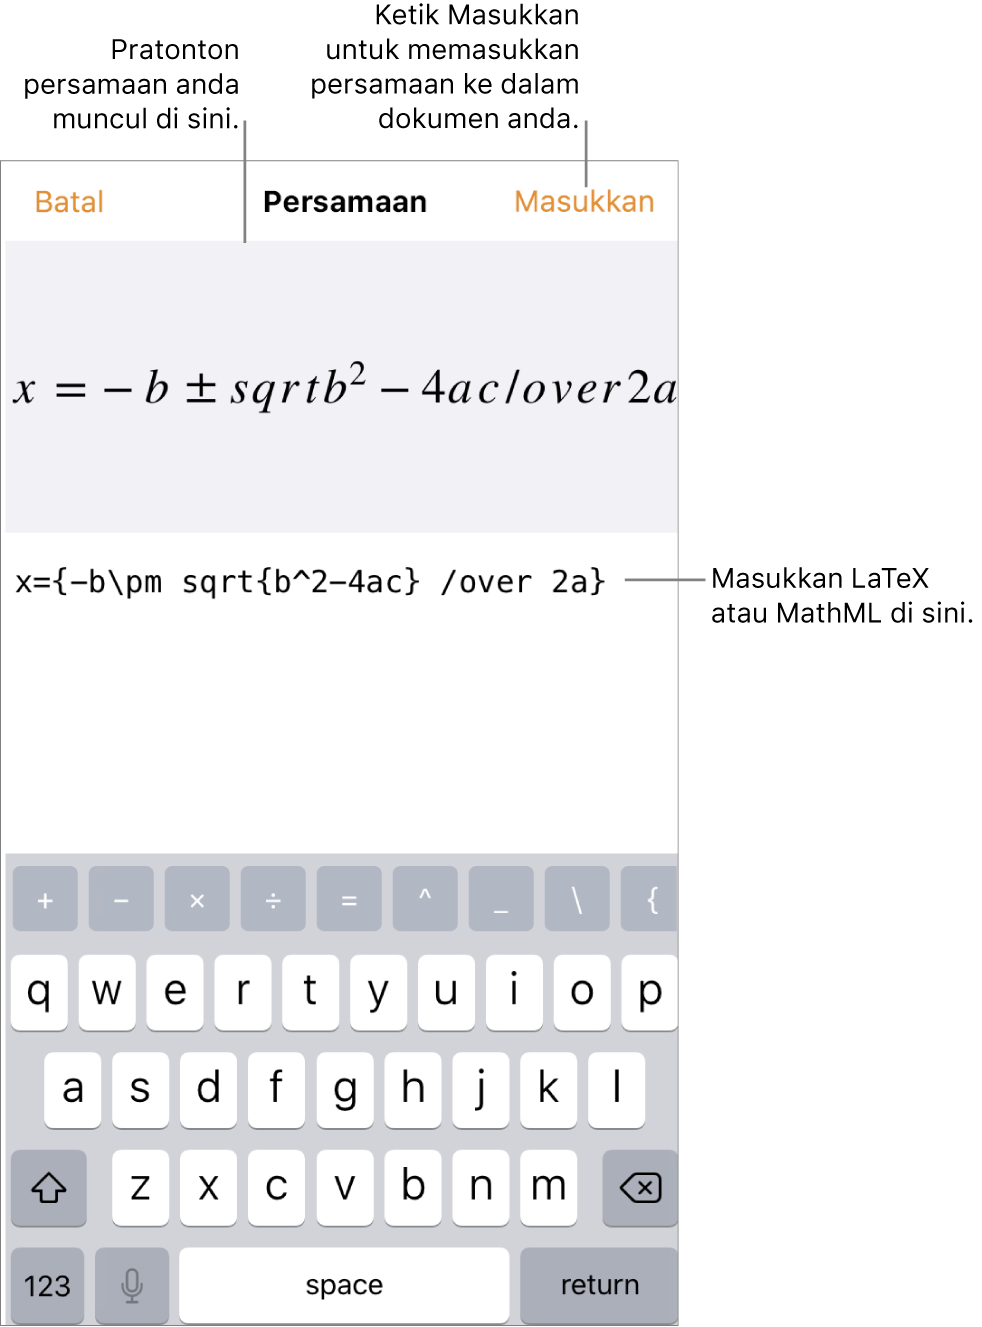 Dialog Persamaan, menunjukkan formula kuadratik ditulis menggunakan perintah LaTeX manakala pratonton formulanya di atas.